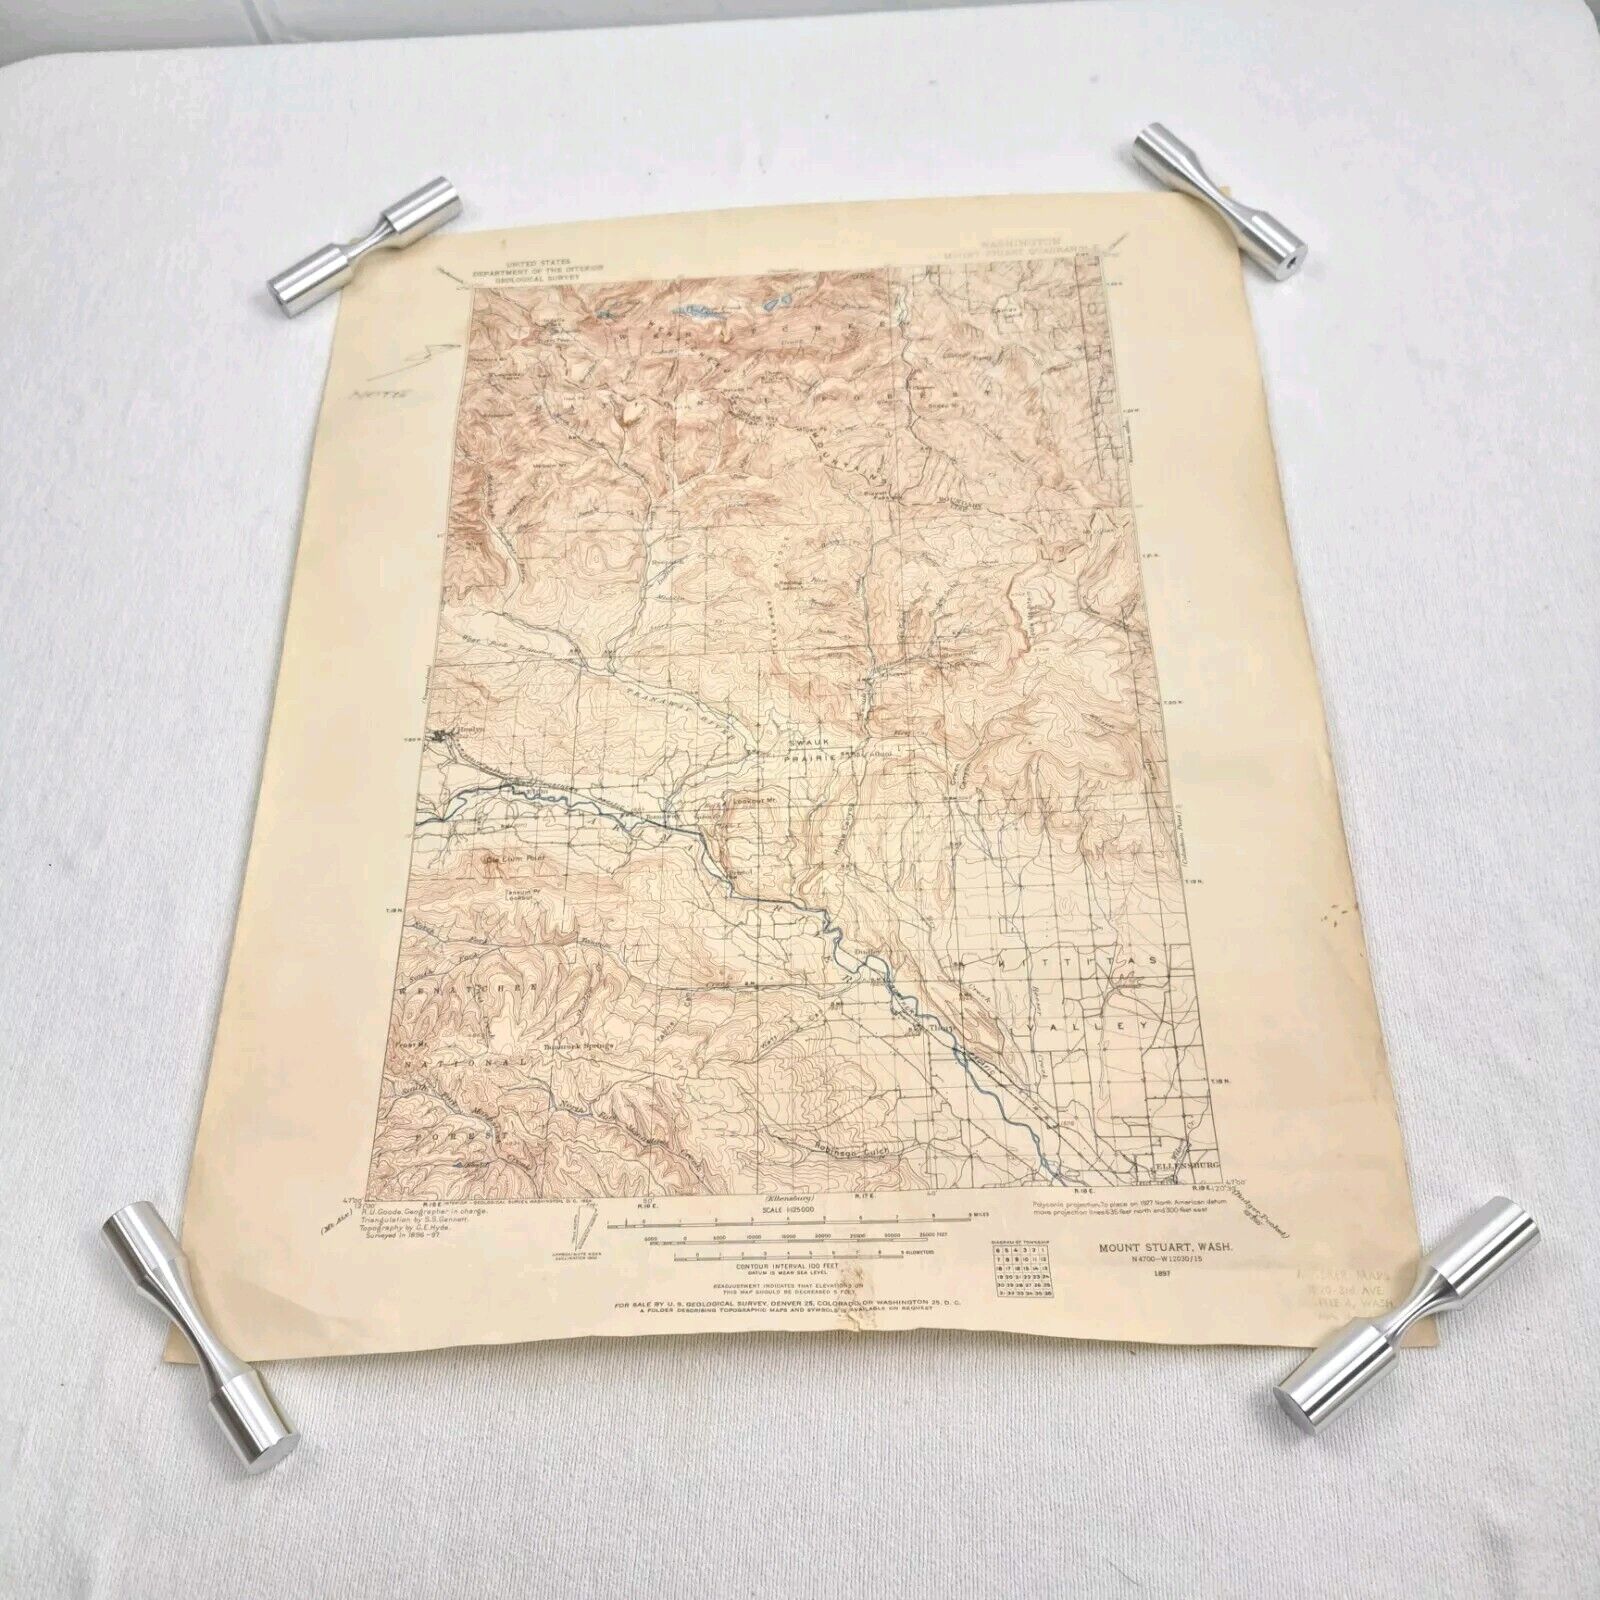 US Dept. of The Interior Geological Survey Map Wa. MOUNT STUART QUADRANGLE 1897 